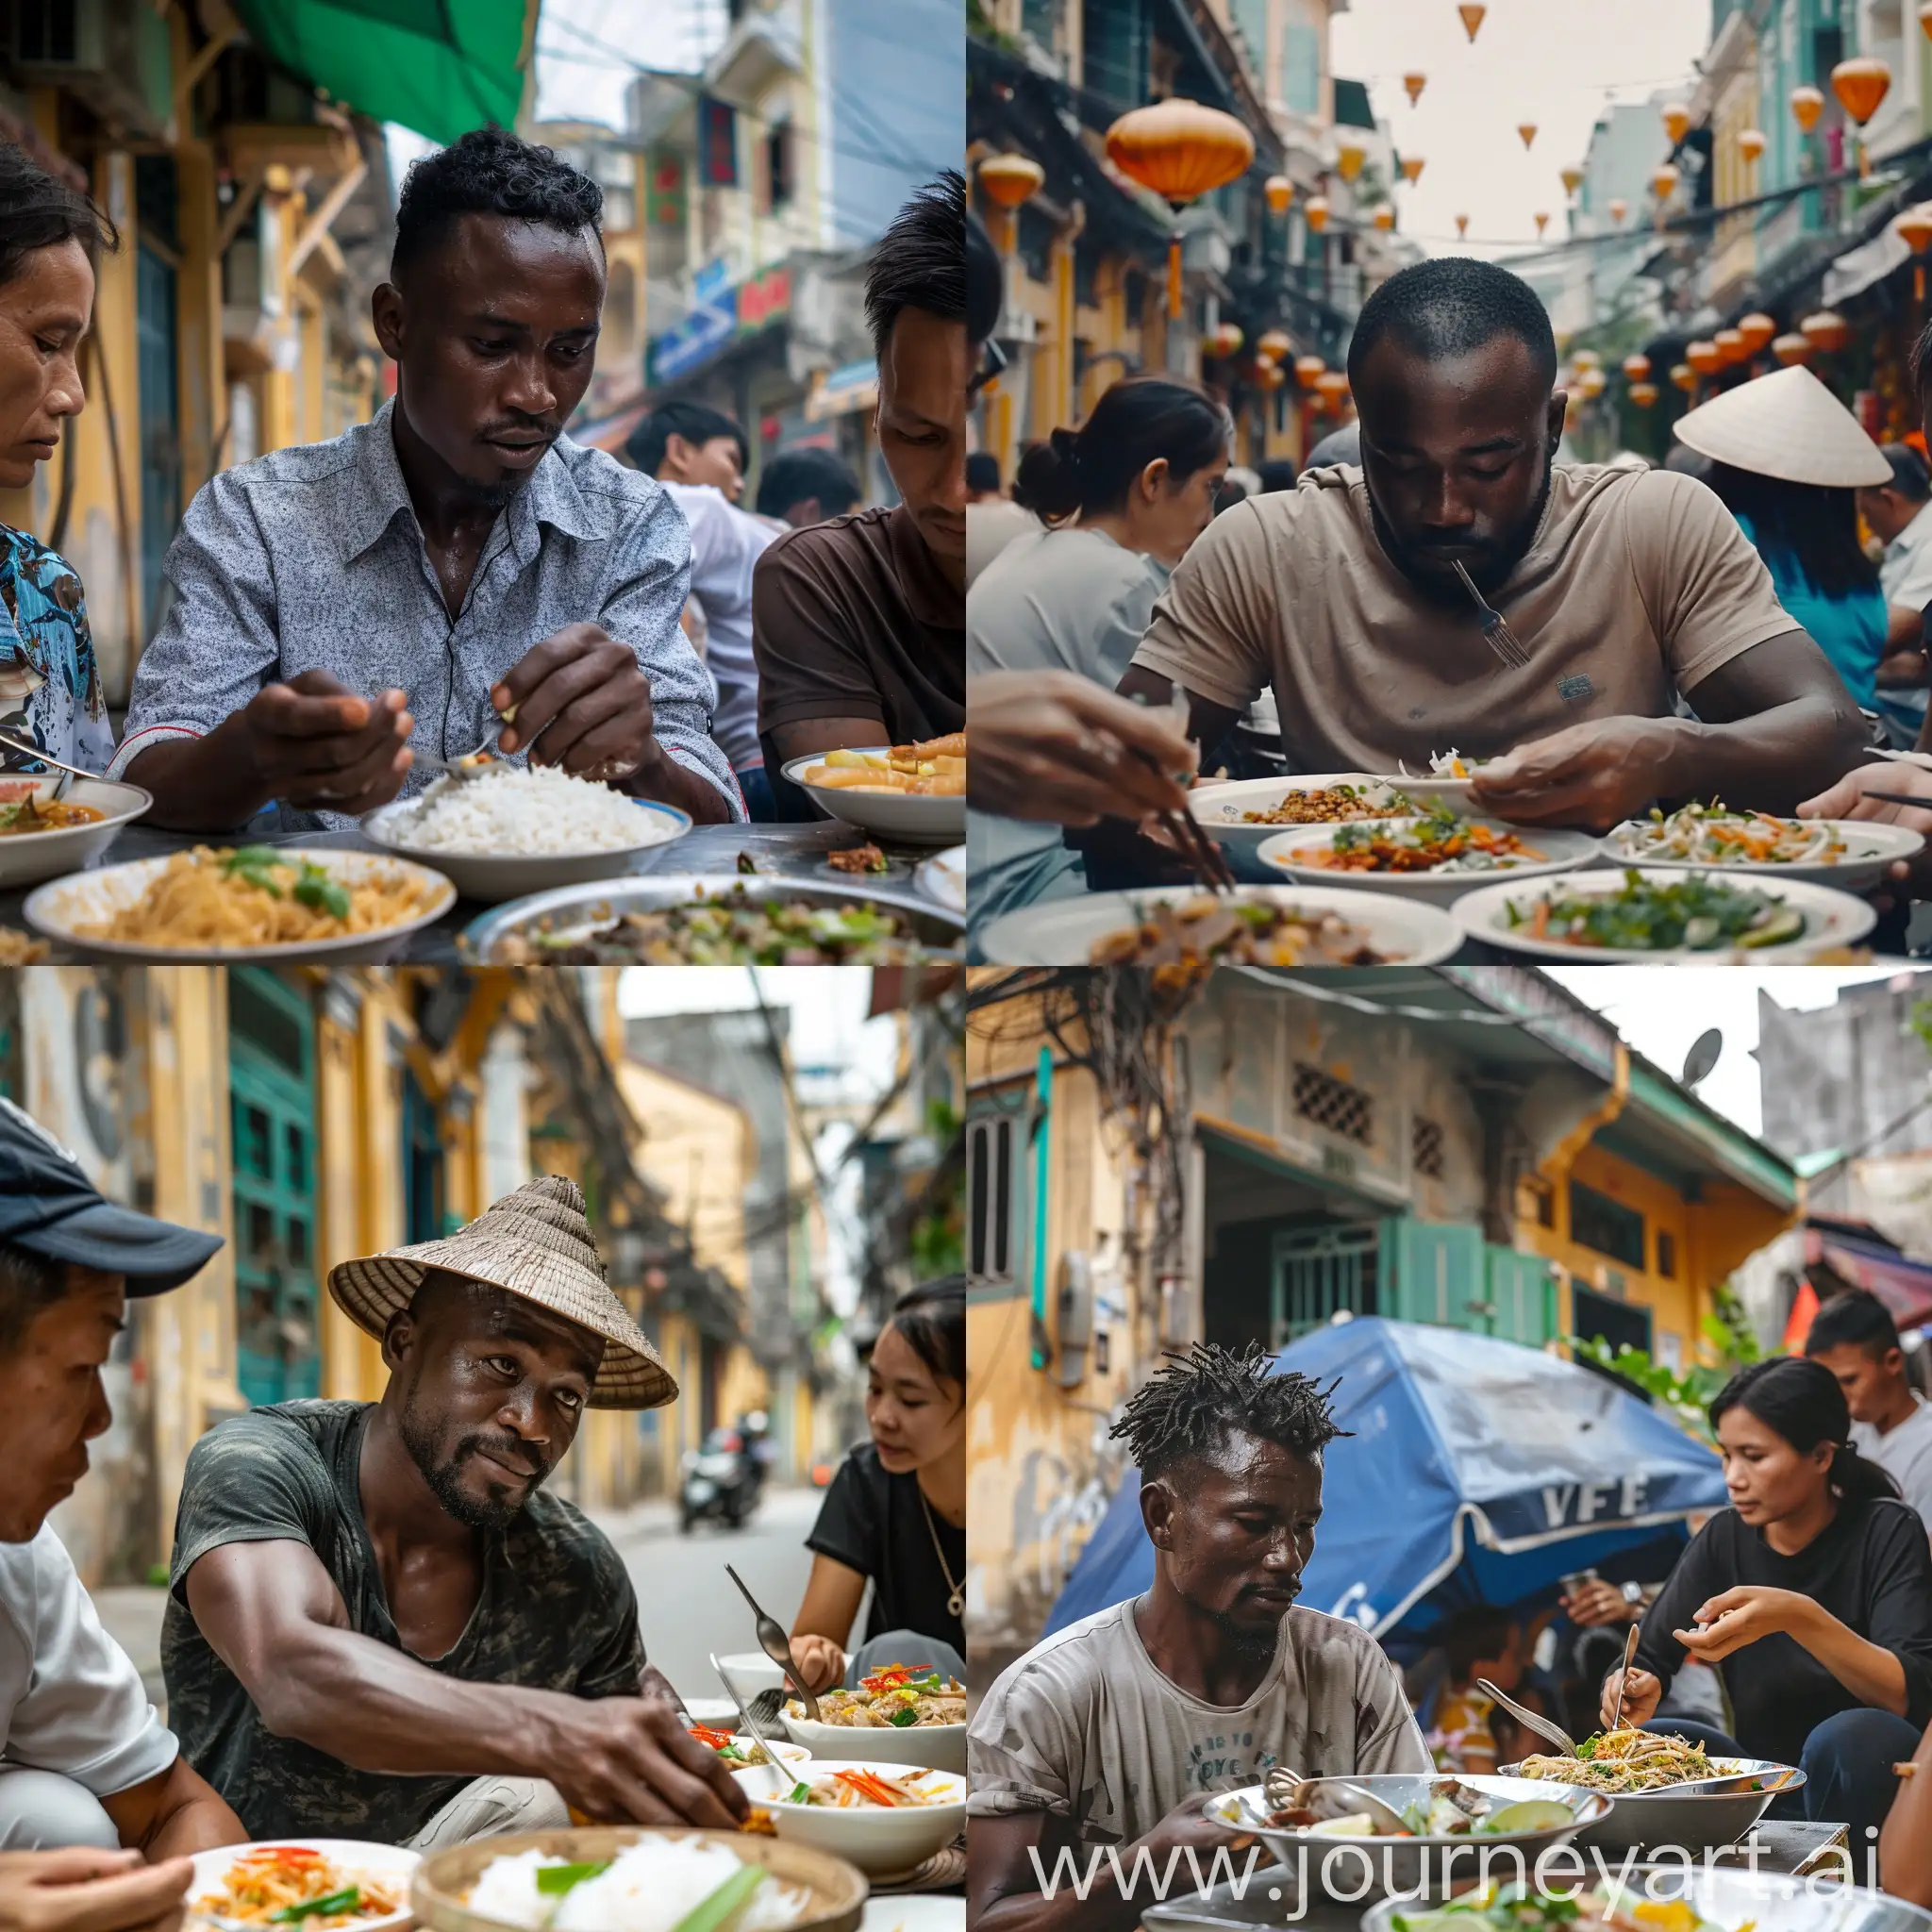 Black-Man-Enjoying-Vietnamese-Street-Food-with-Locals-in-Urban-Setting